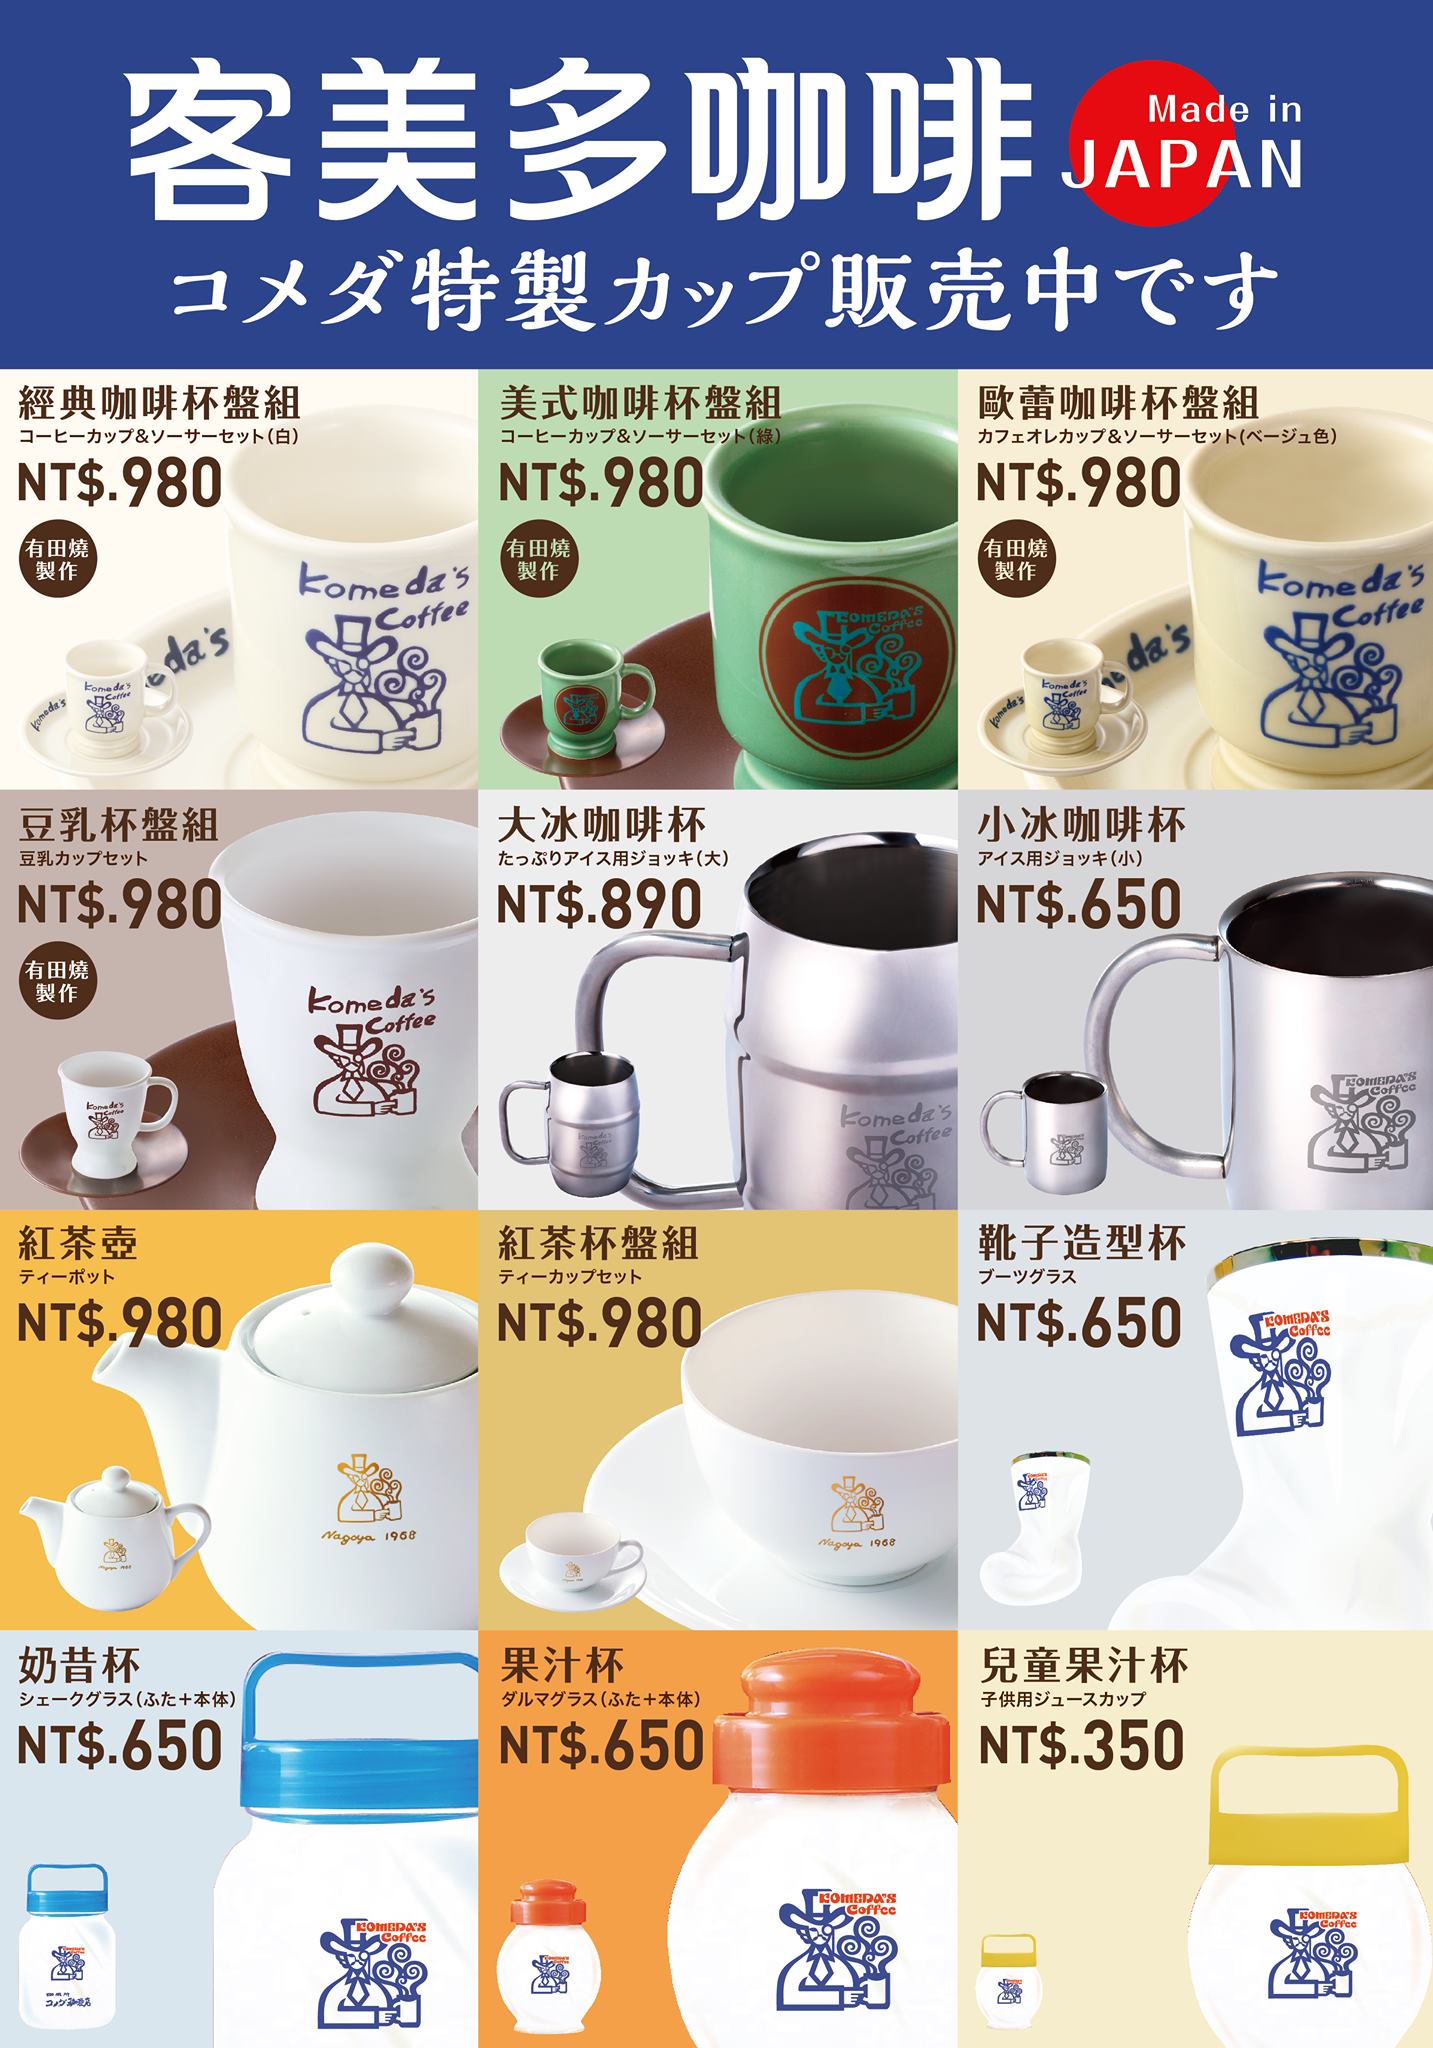 Komeda's Coffee 客美多咖啡周邊商品